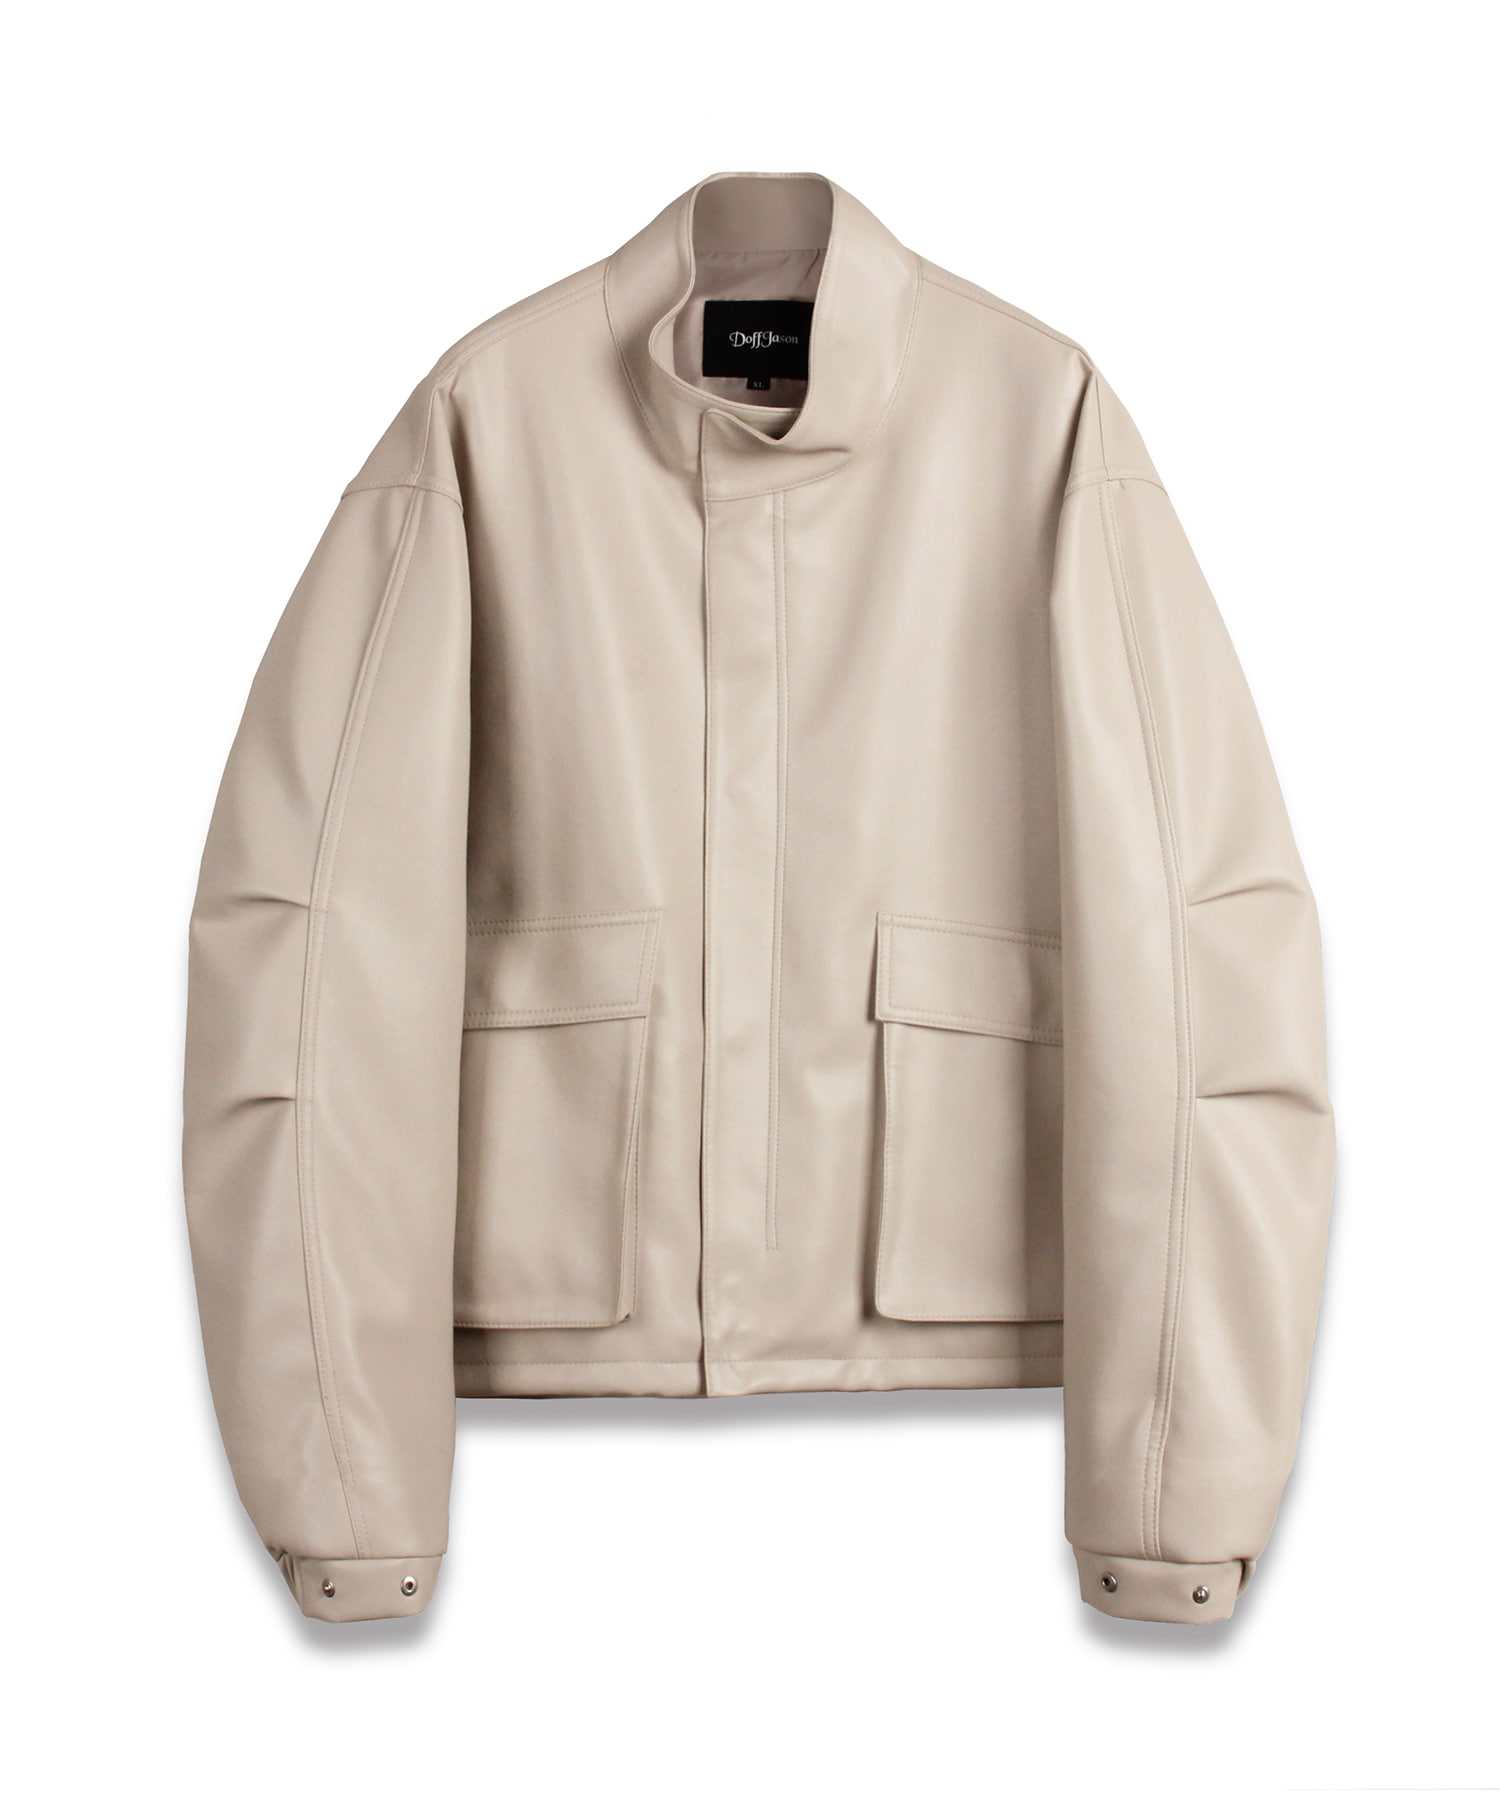 Overfit vegan leather blouson jacket (ivory)